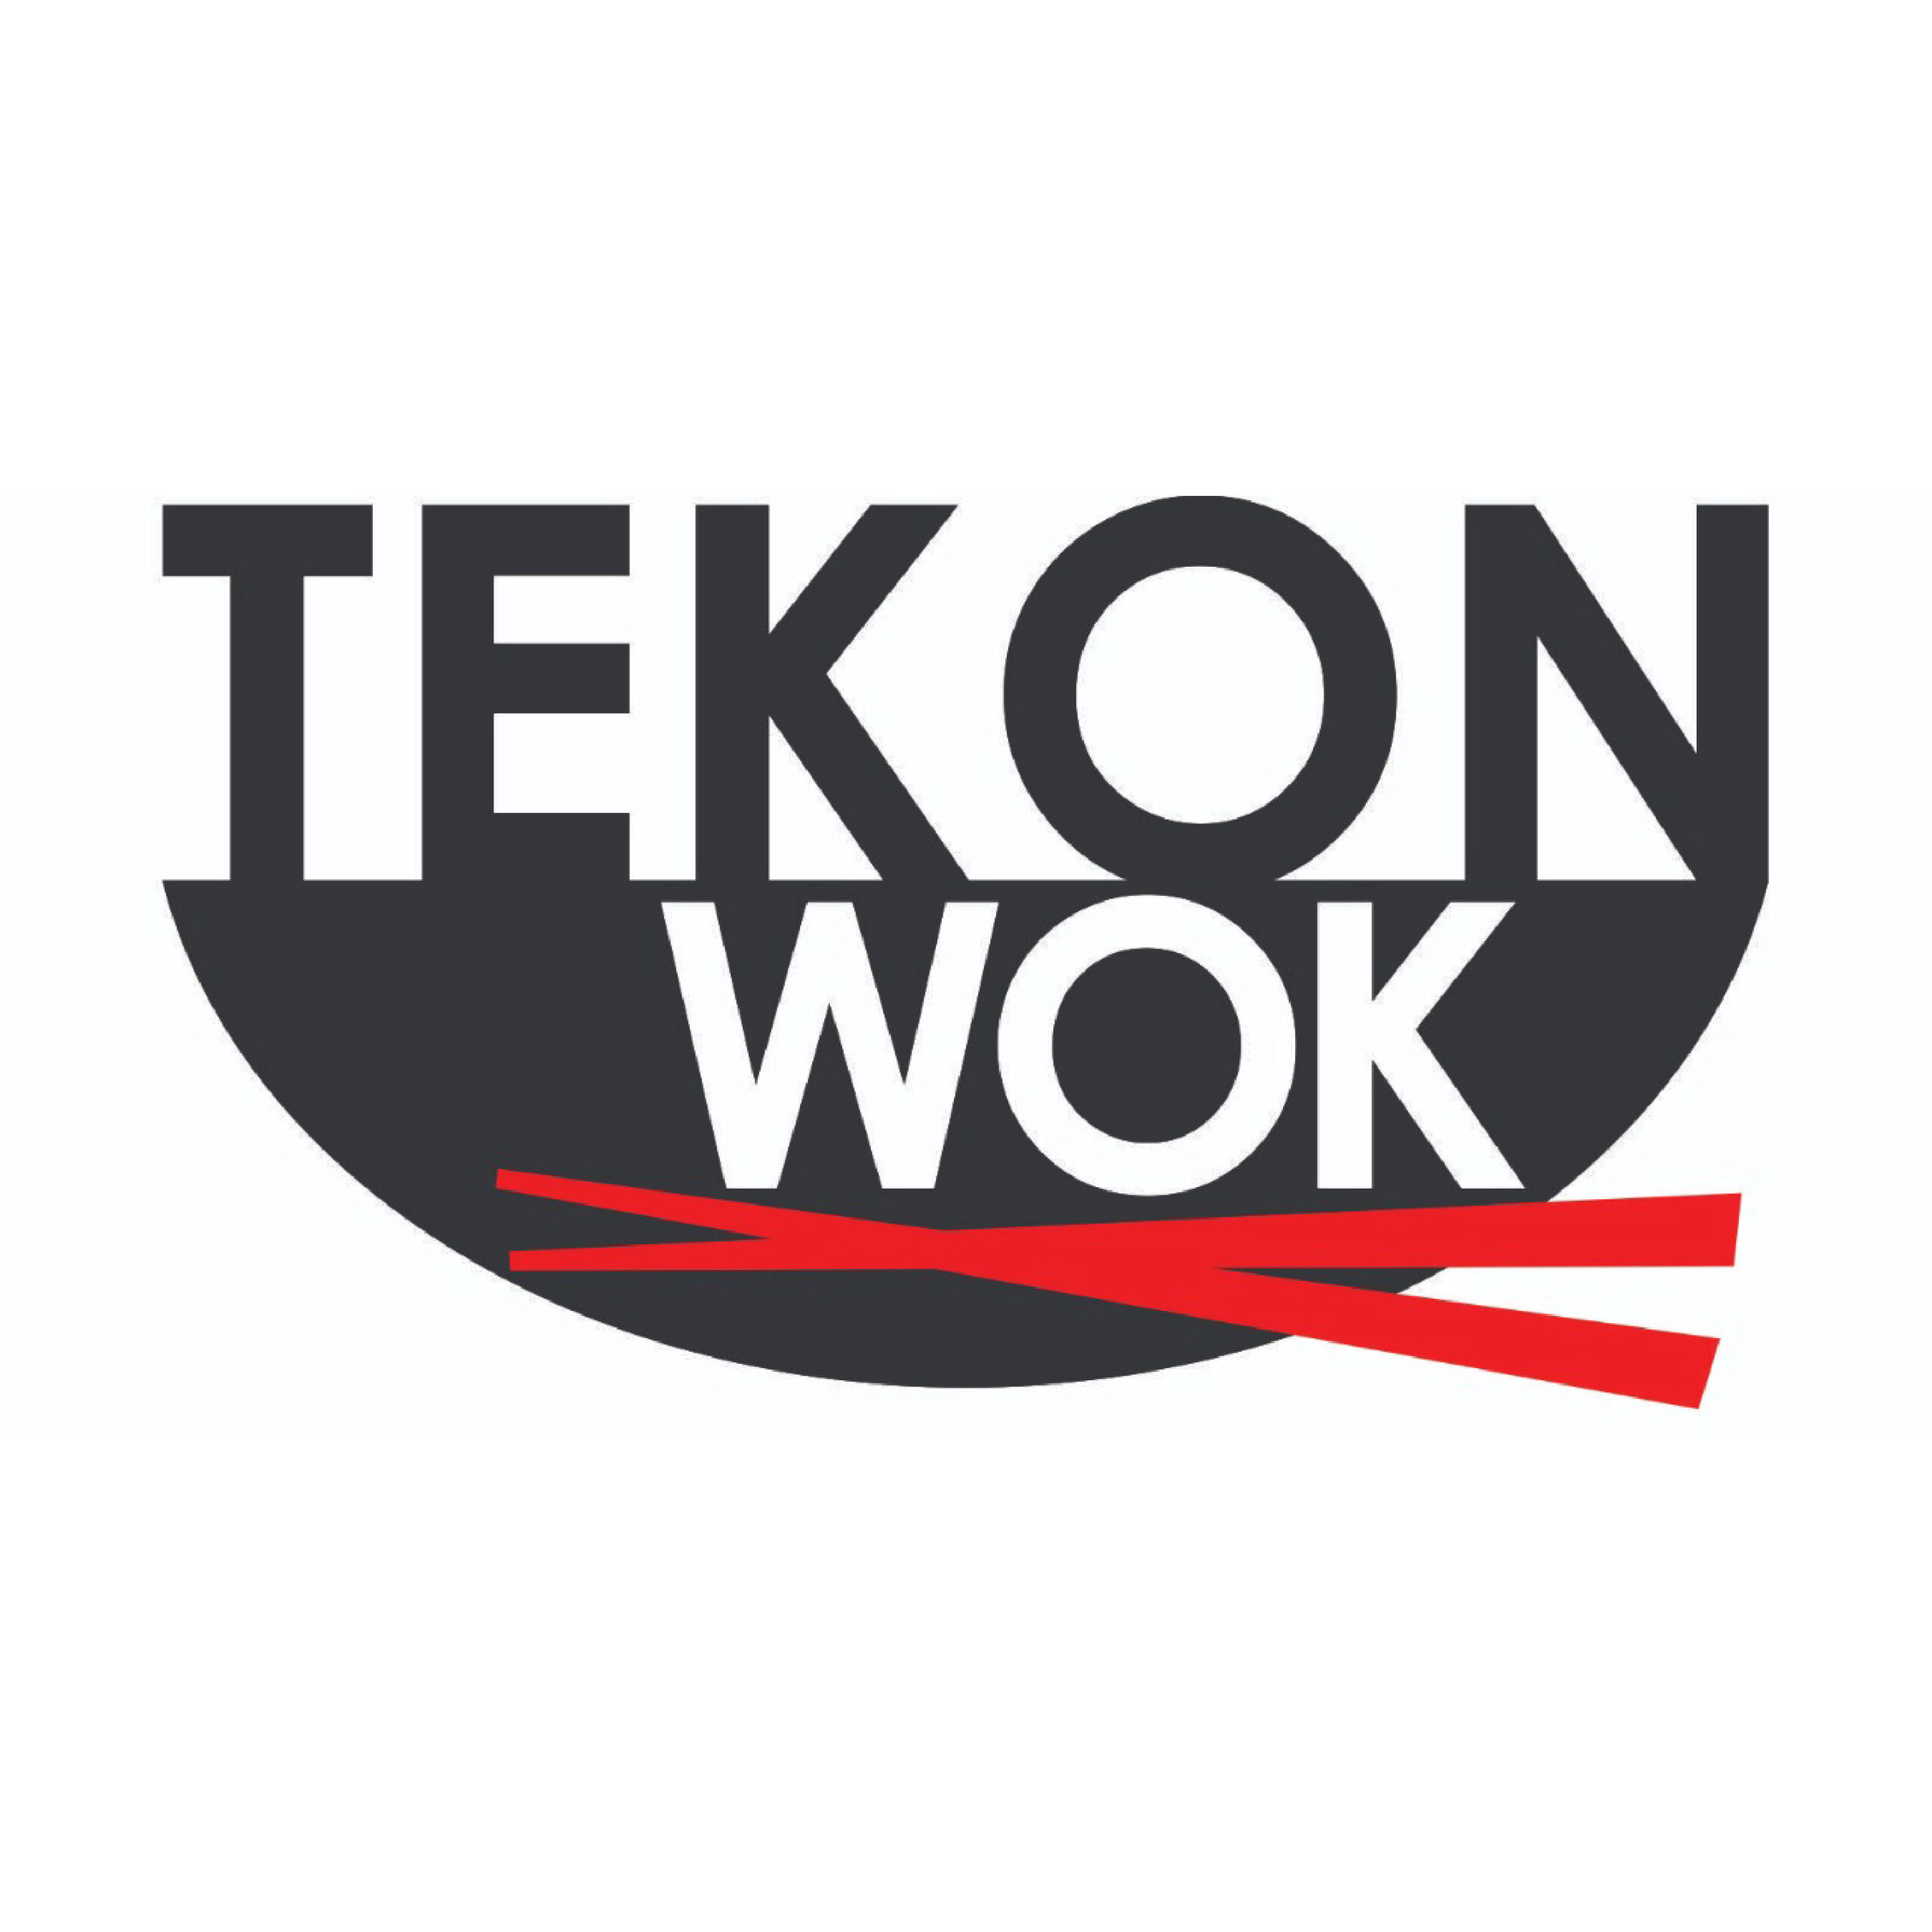 Tekon Wok pag web